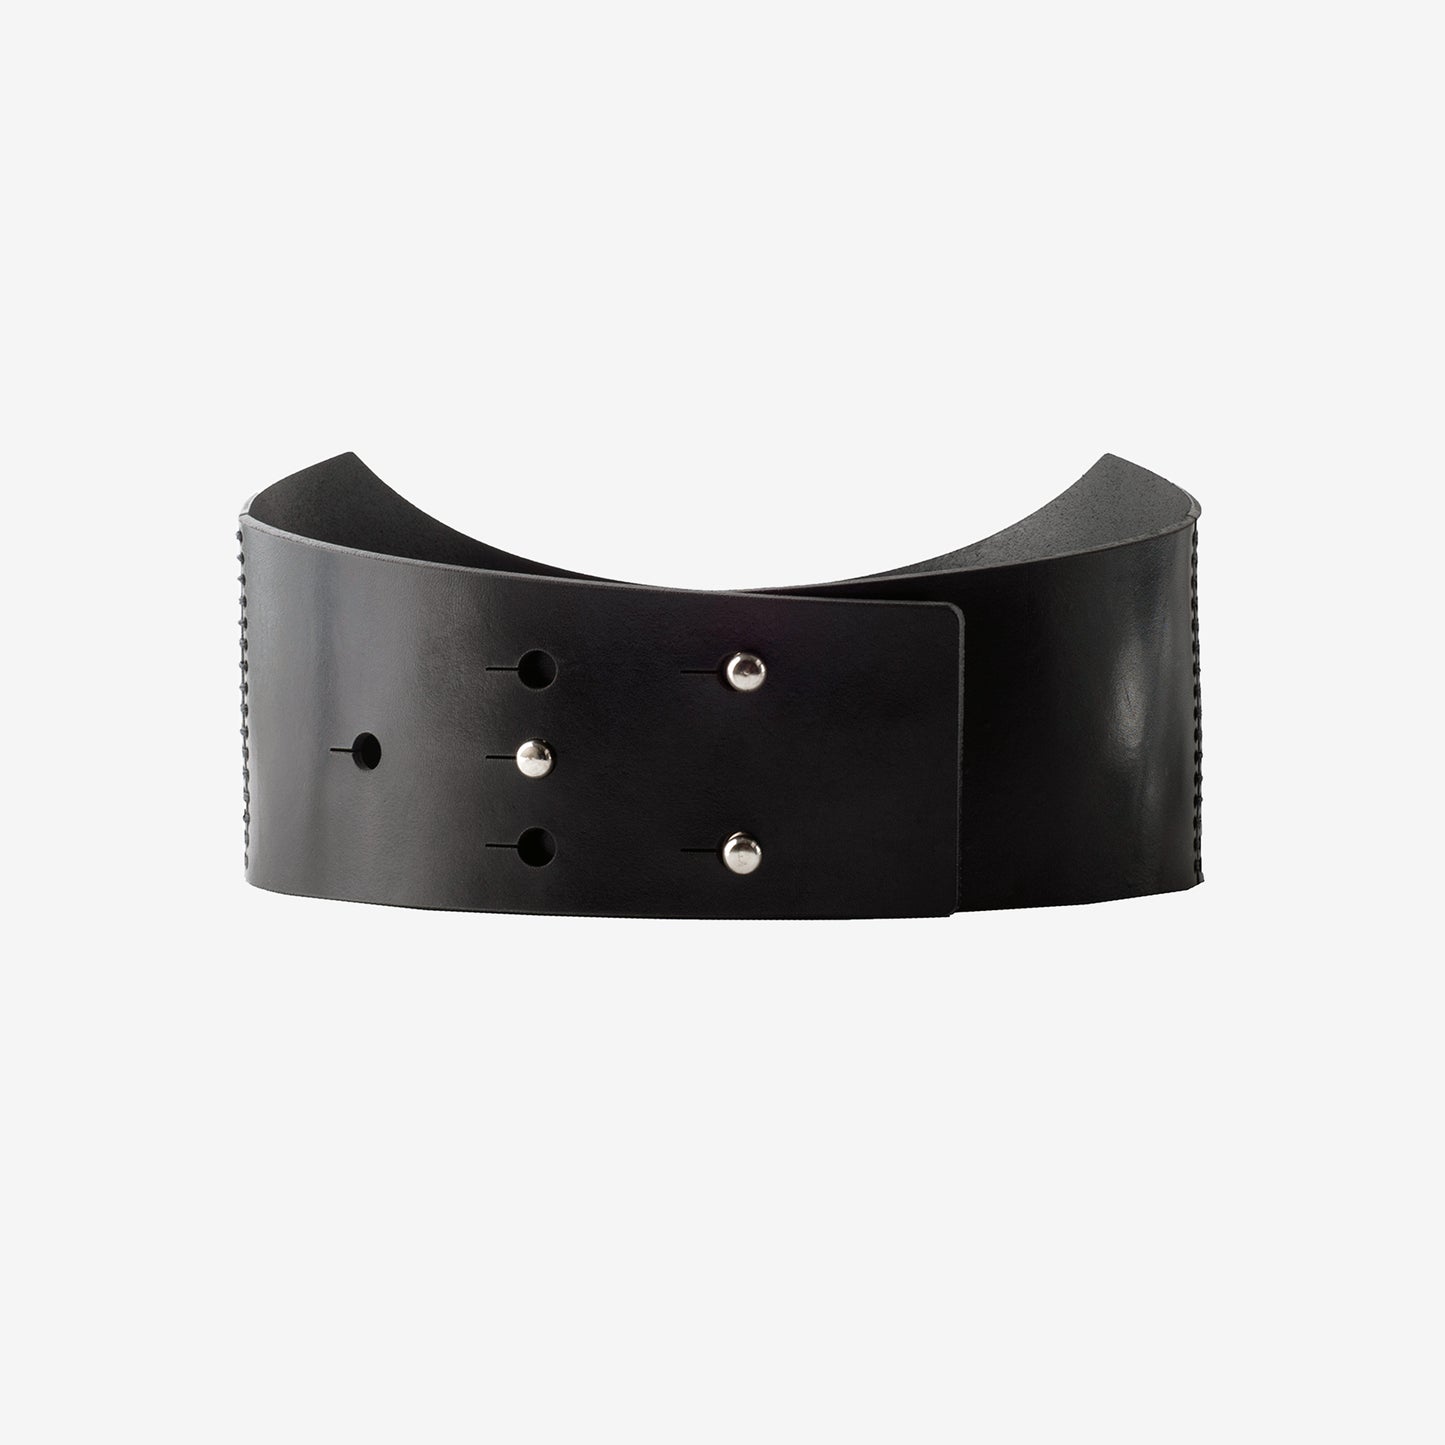 Snake leather waist belt